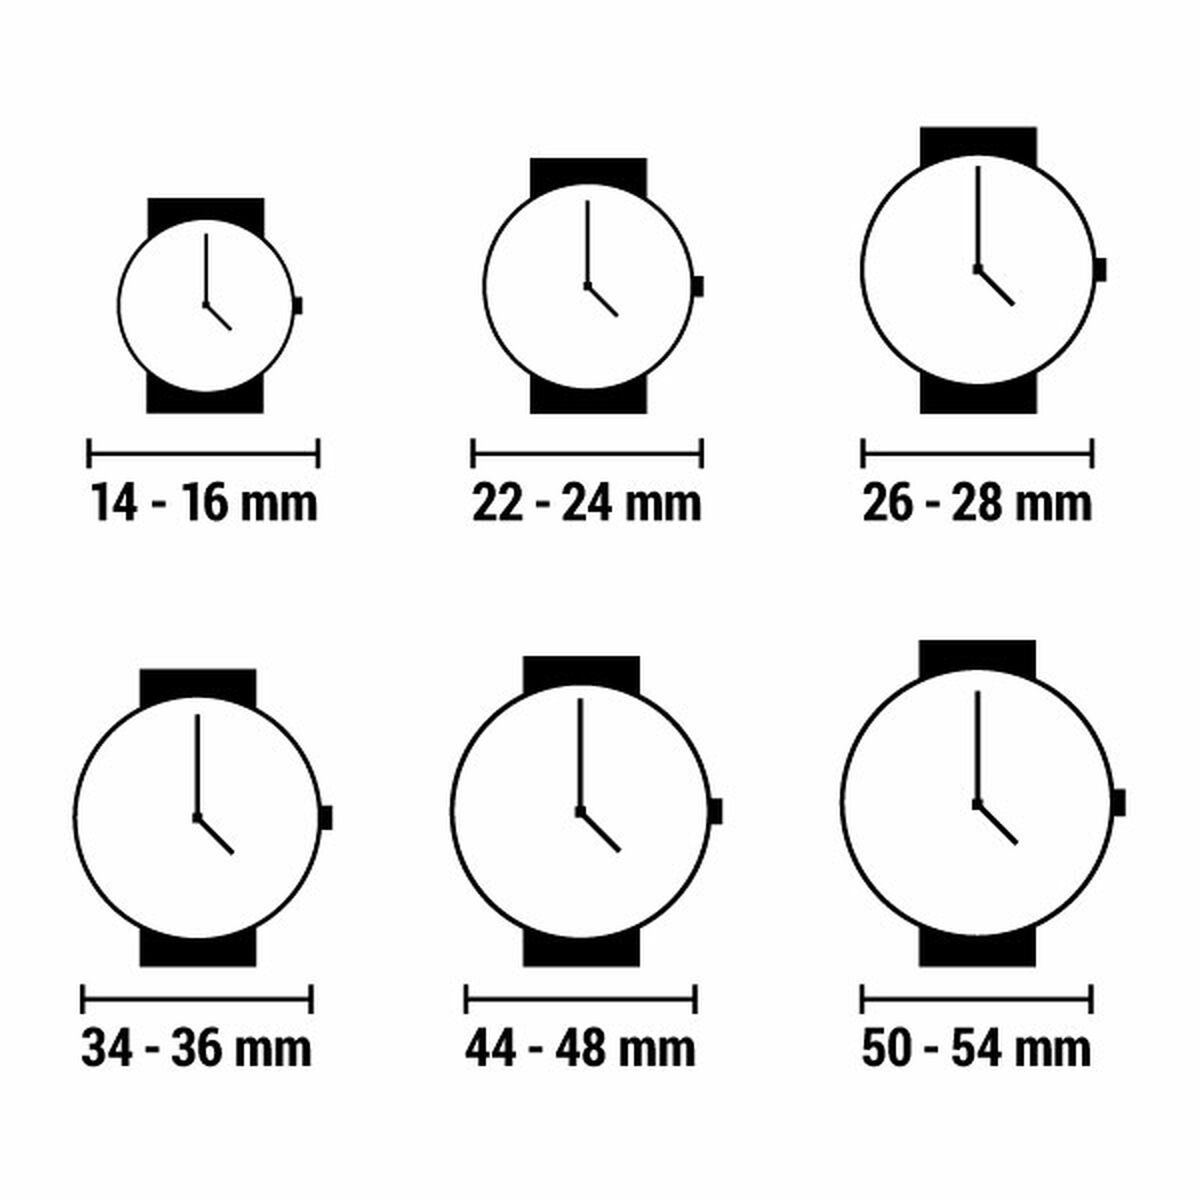 Horloge Dames Swatch SUOK400